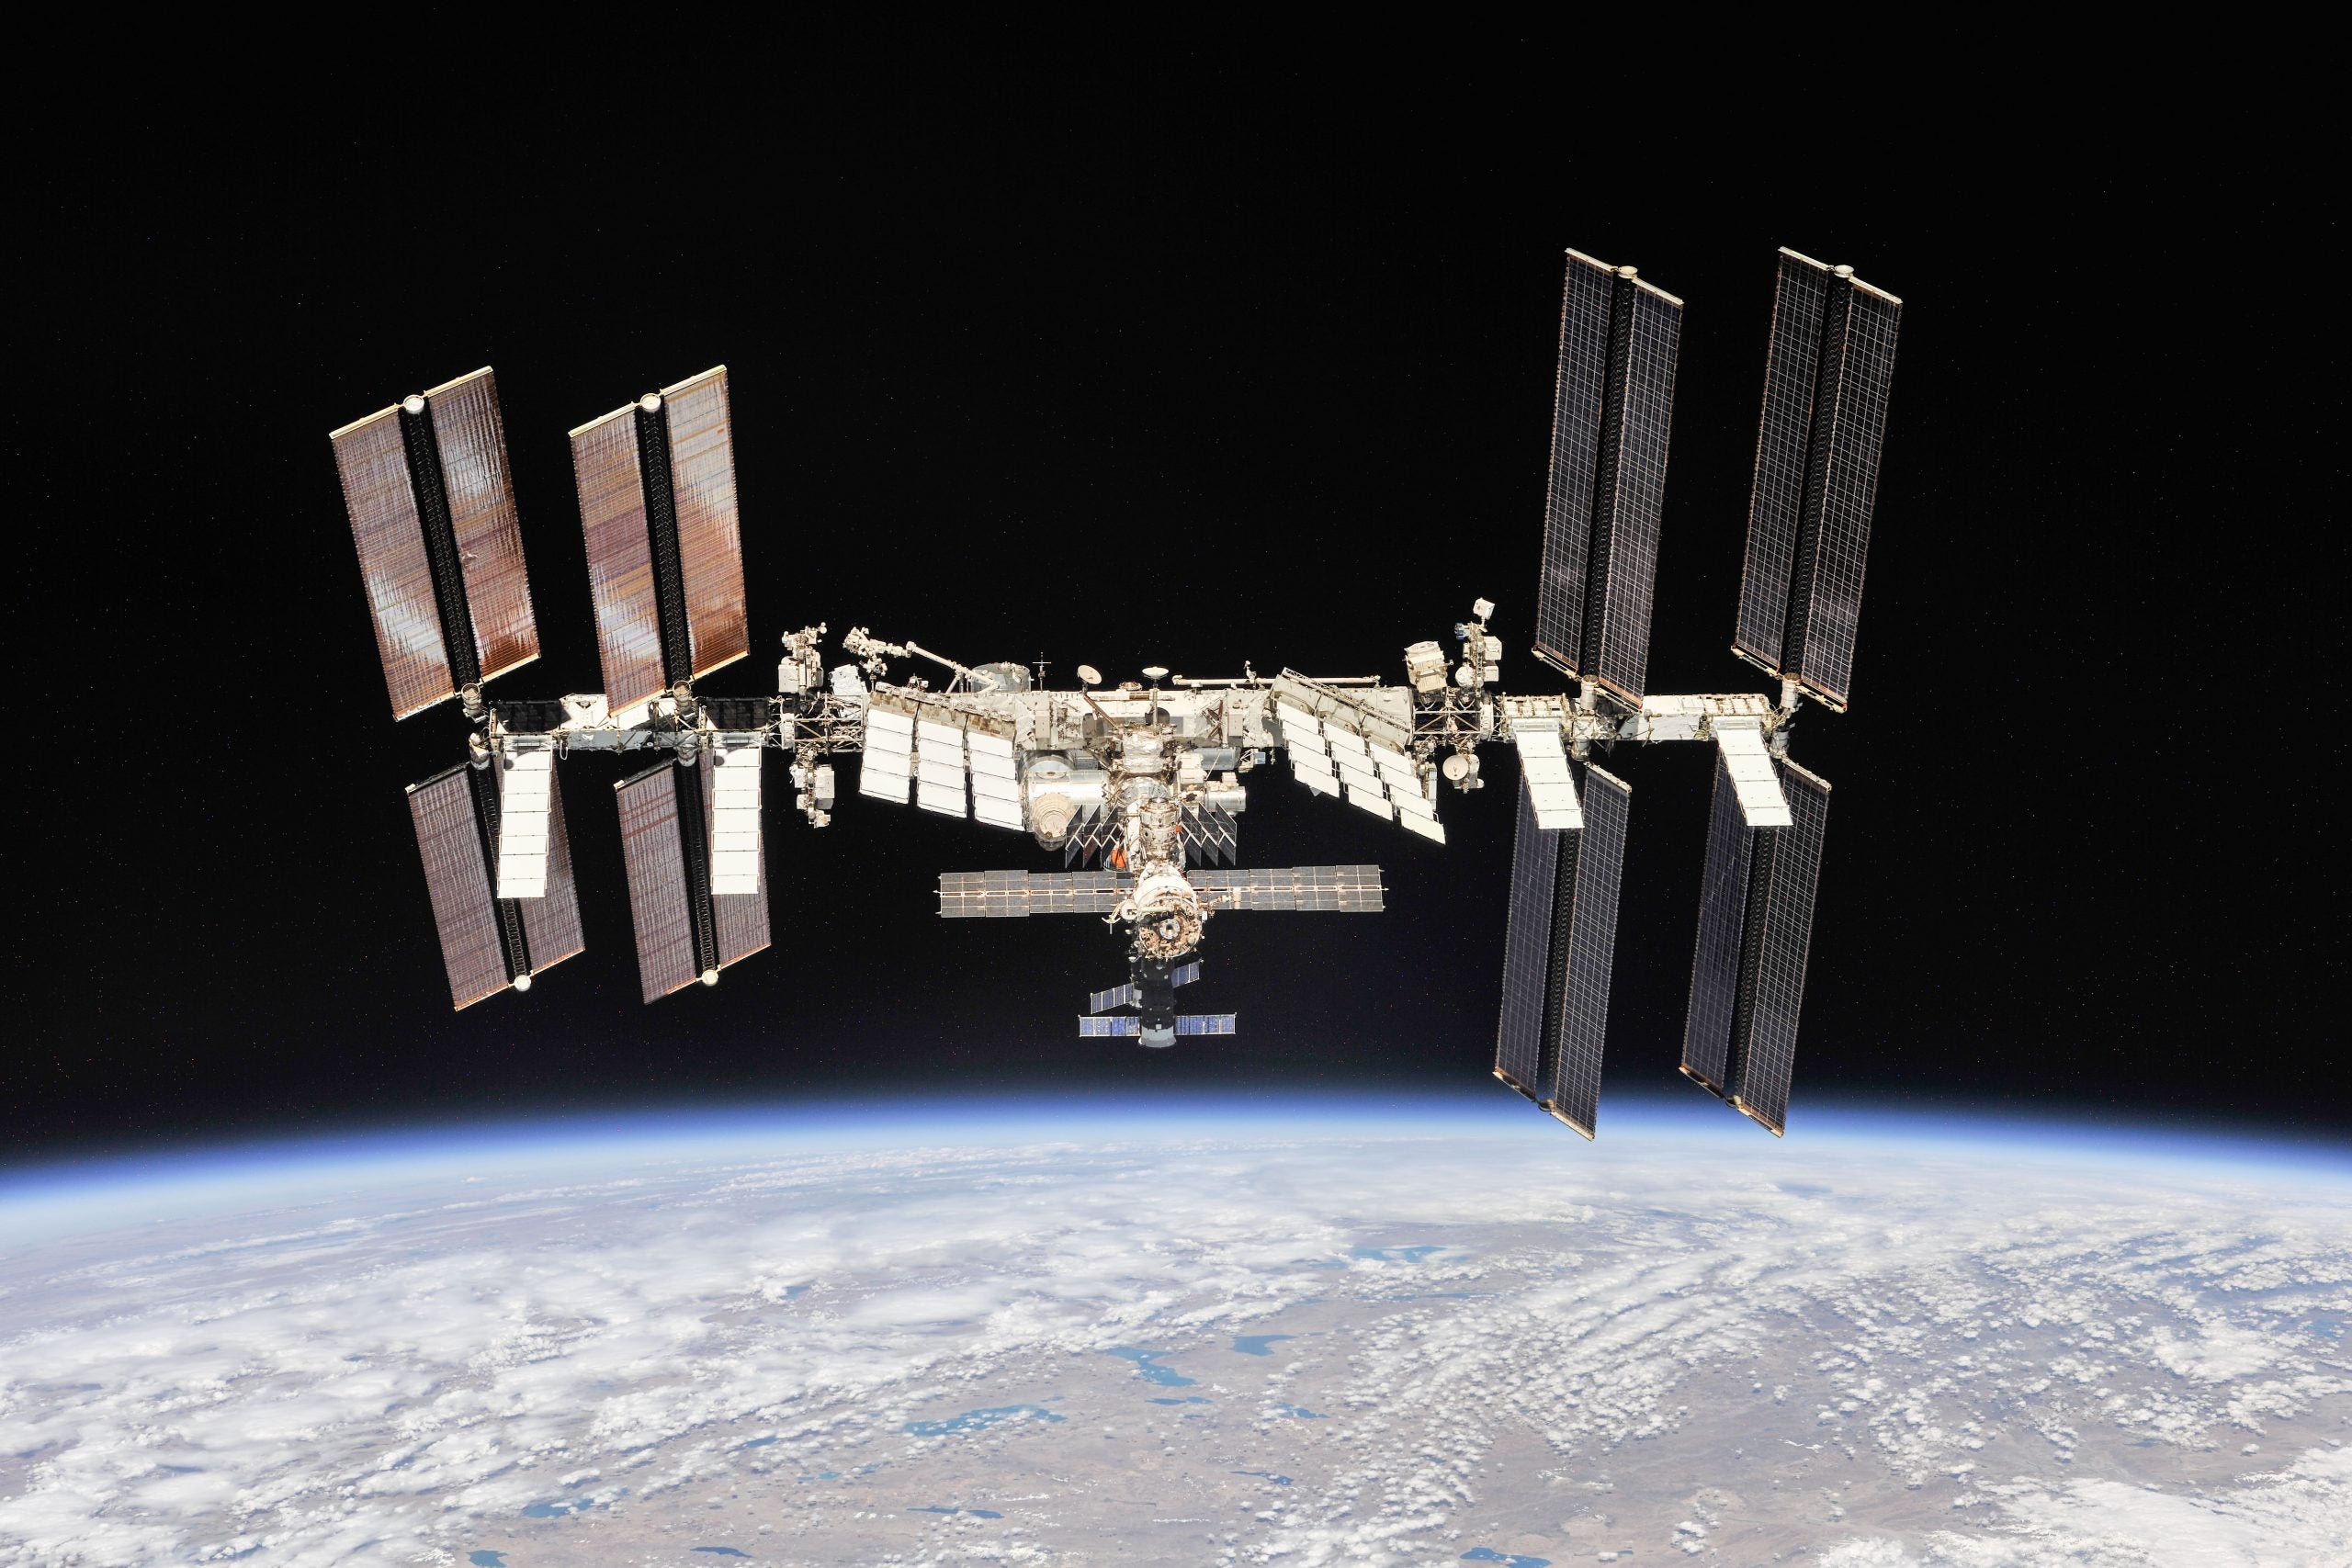 Northrop Grumman Spacecraft Reboosts ISS for the First Time